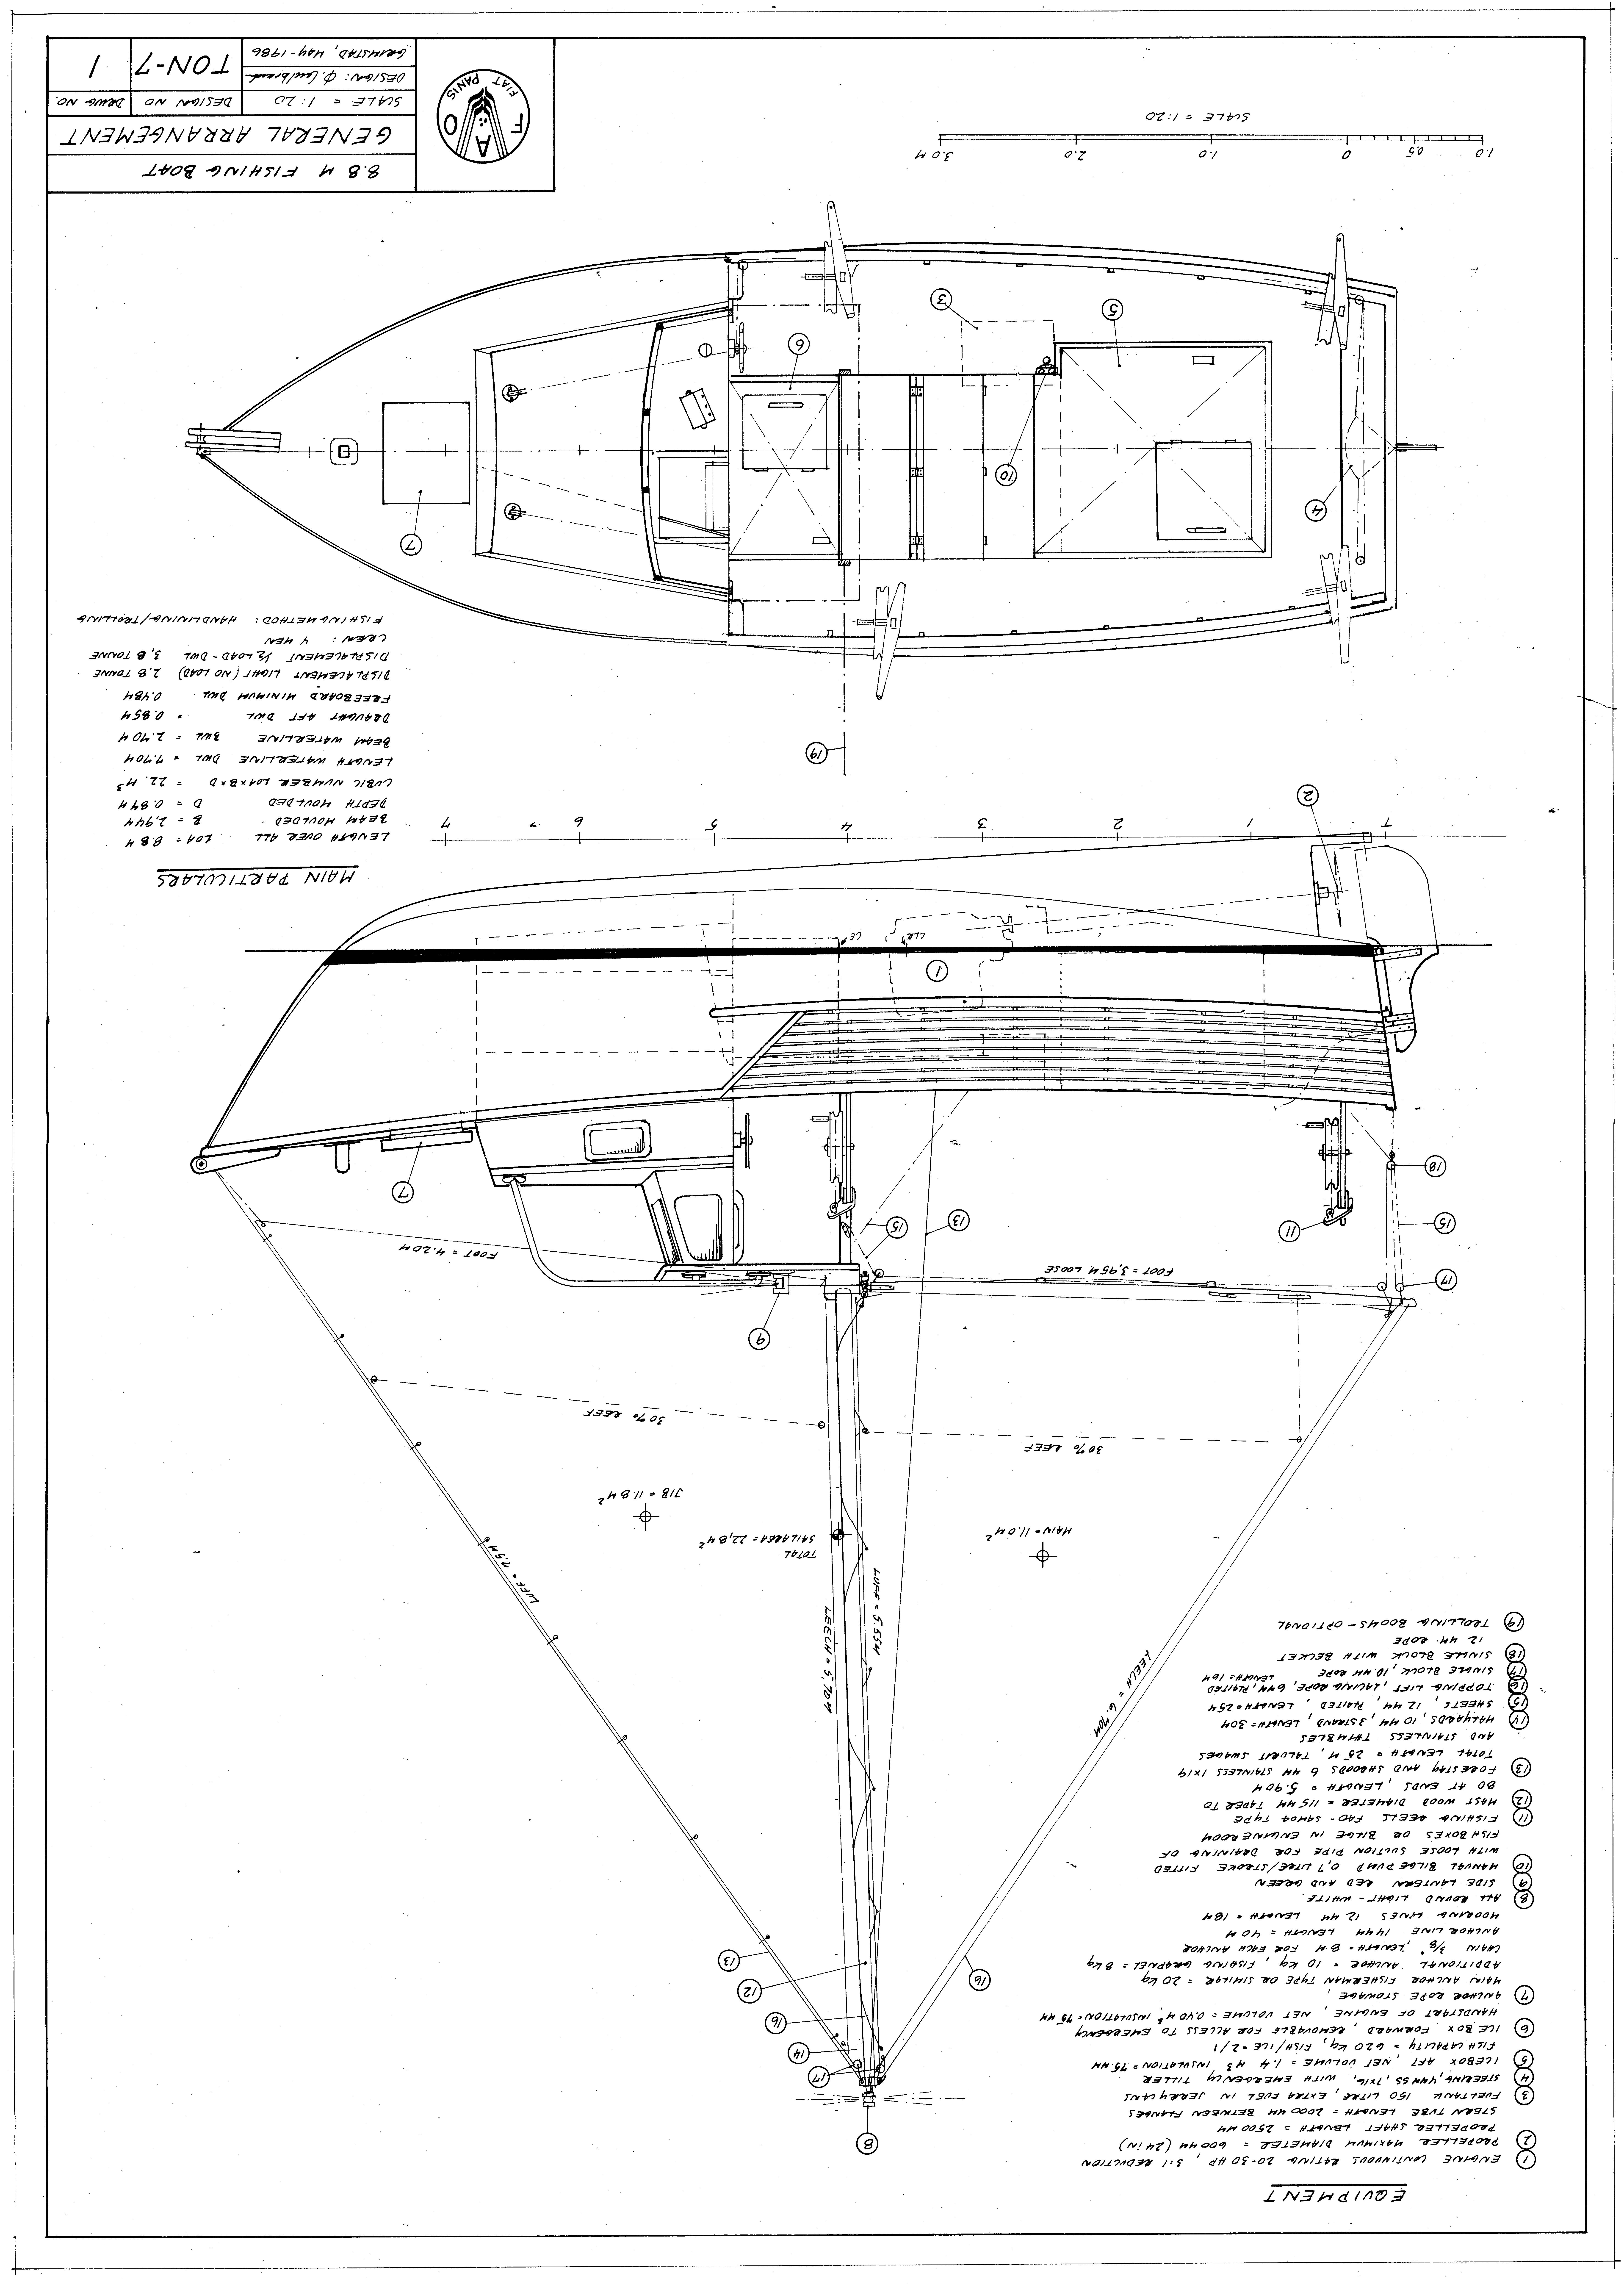 Motor Sailor - 8.8m - Fishing Vessel Design Database (FVDD)